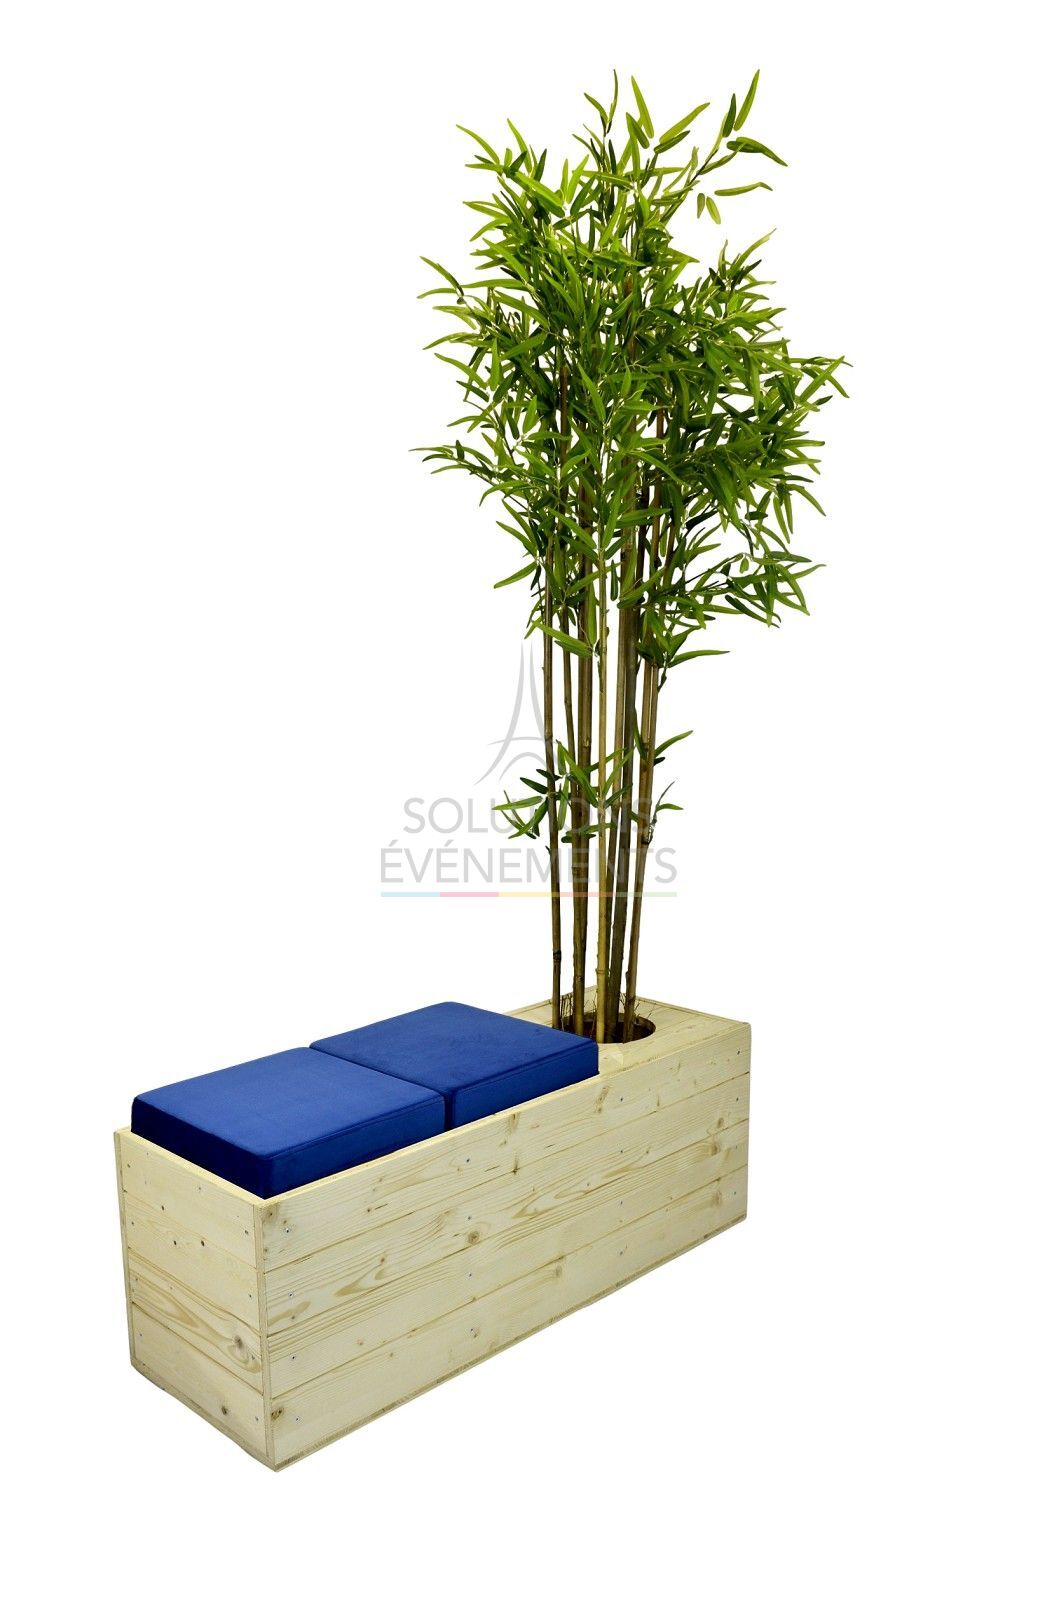 Rental Eco-responsible blue velvet wooden bench with planter